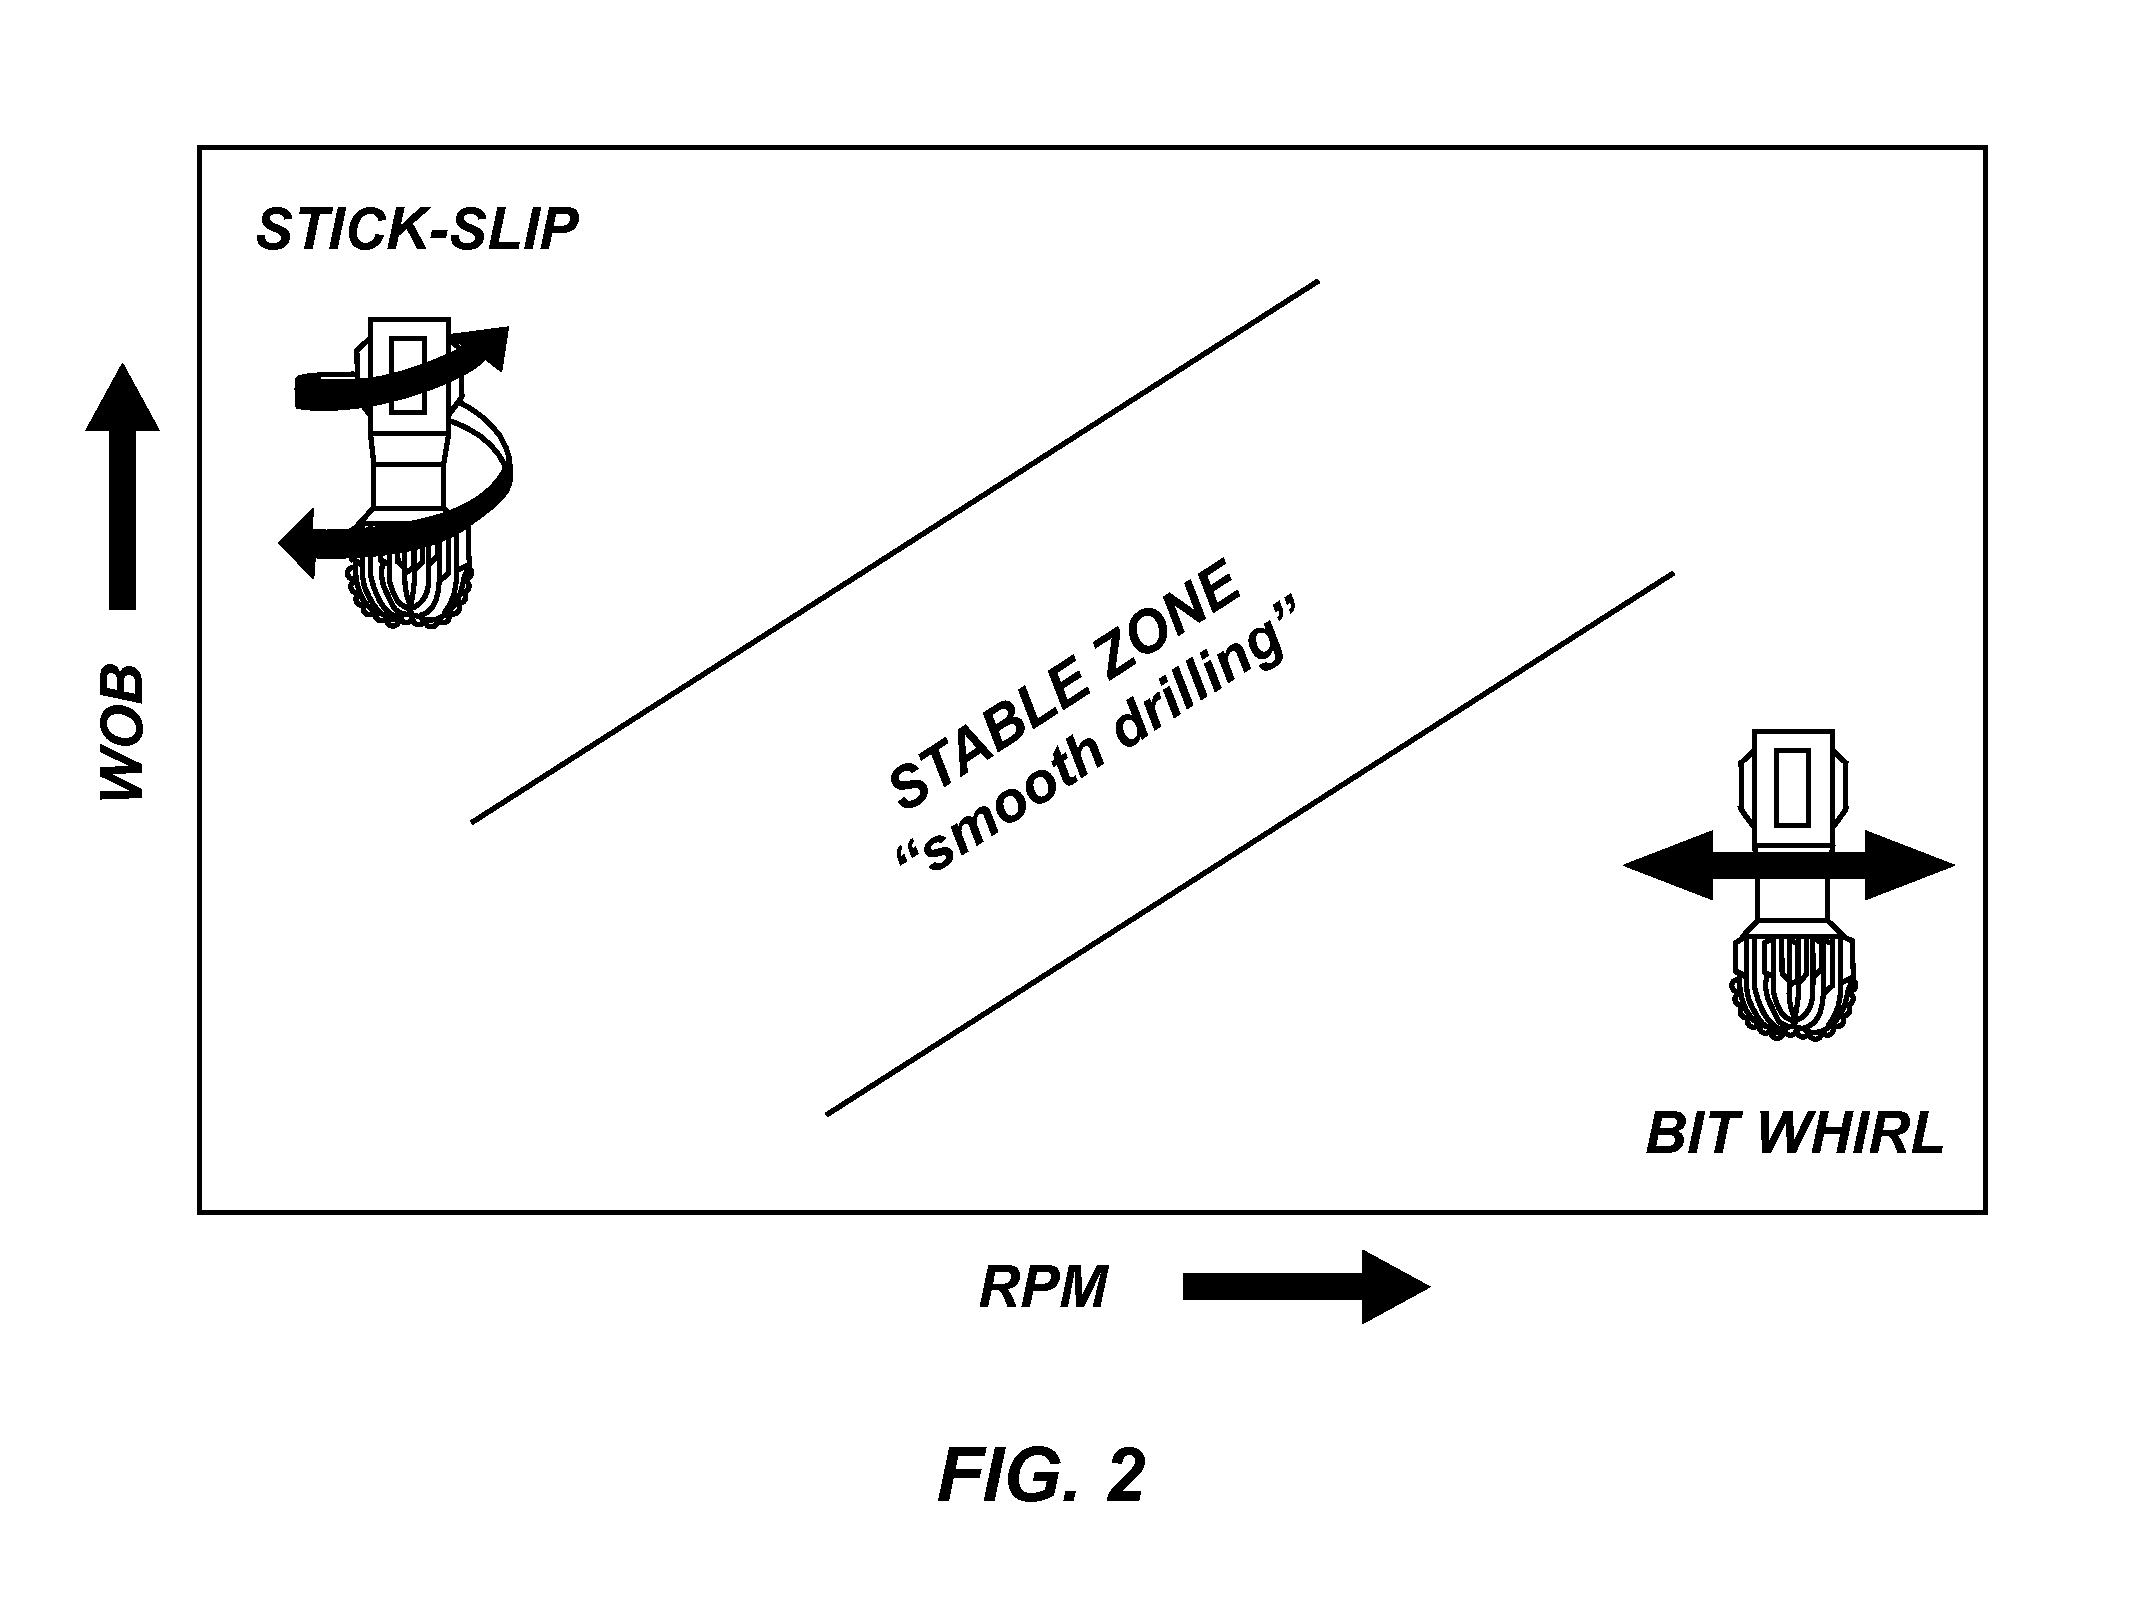 Drill bit design for mitigation of stick slip